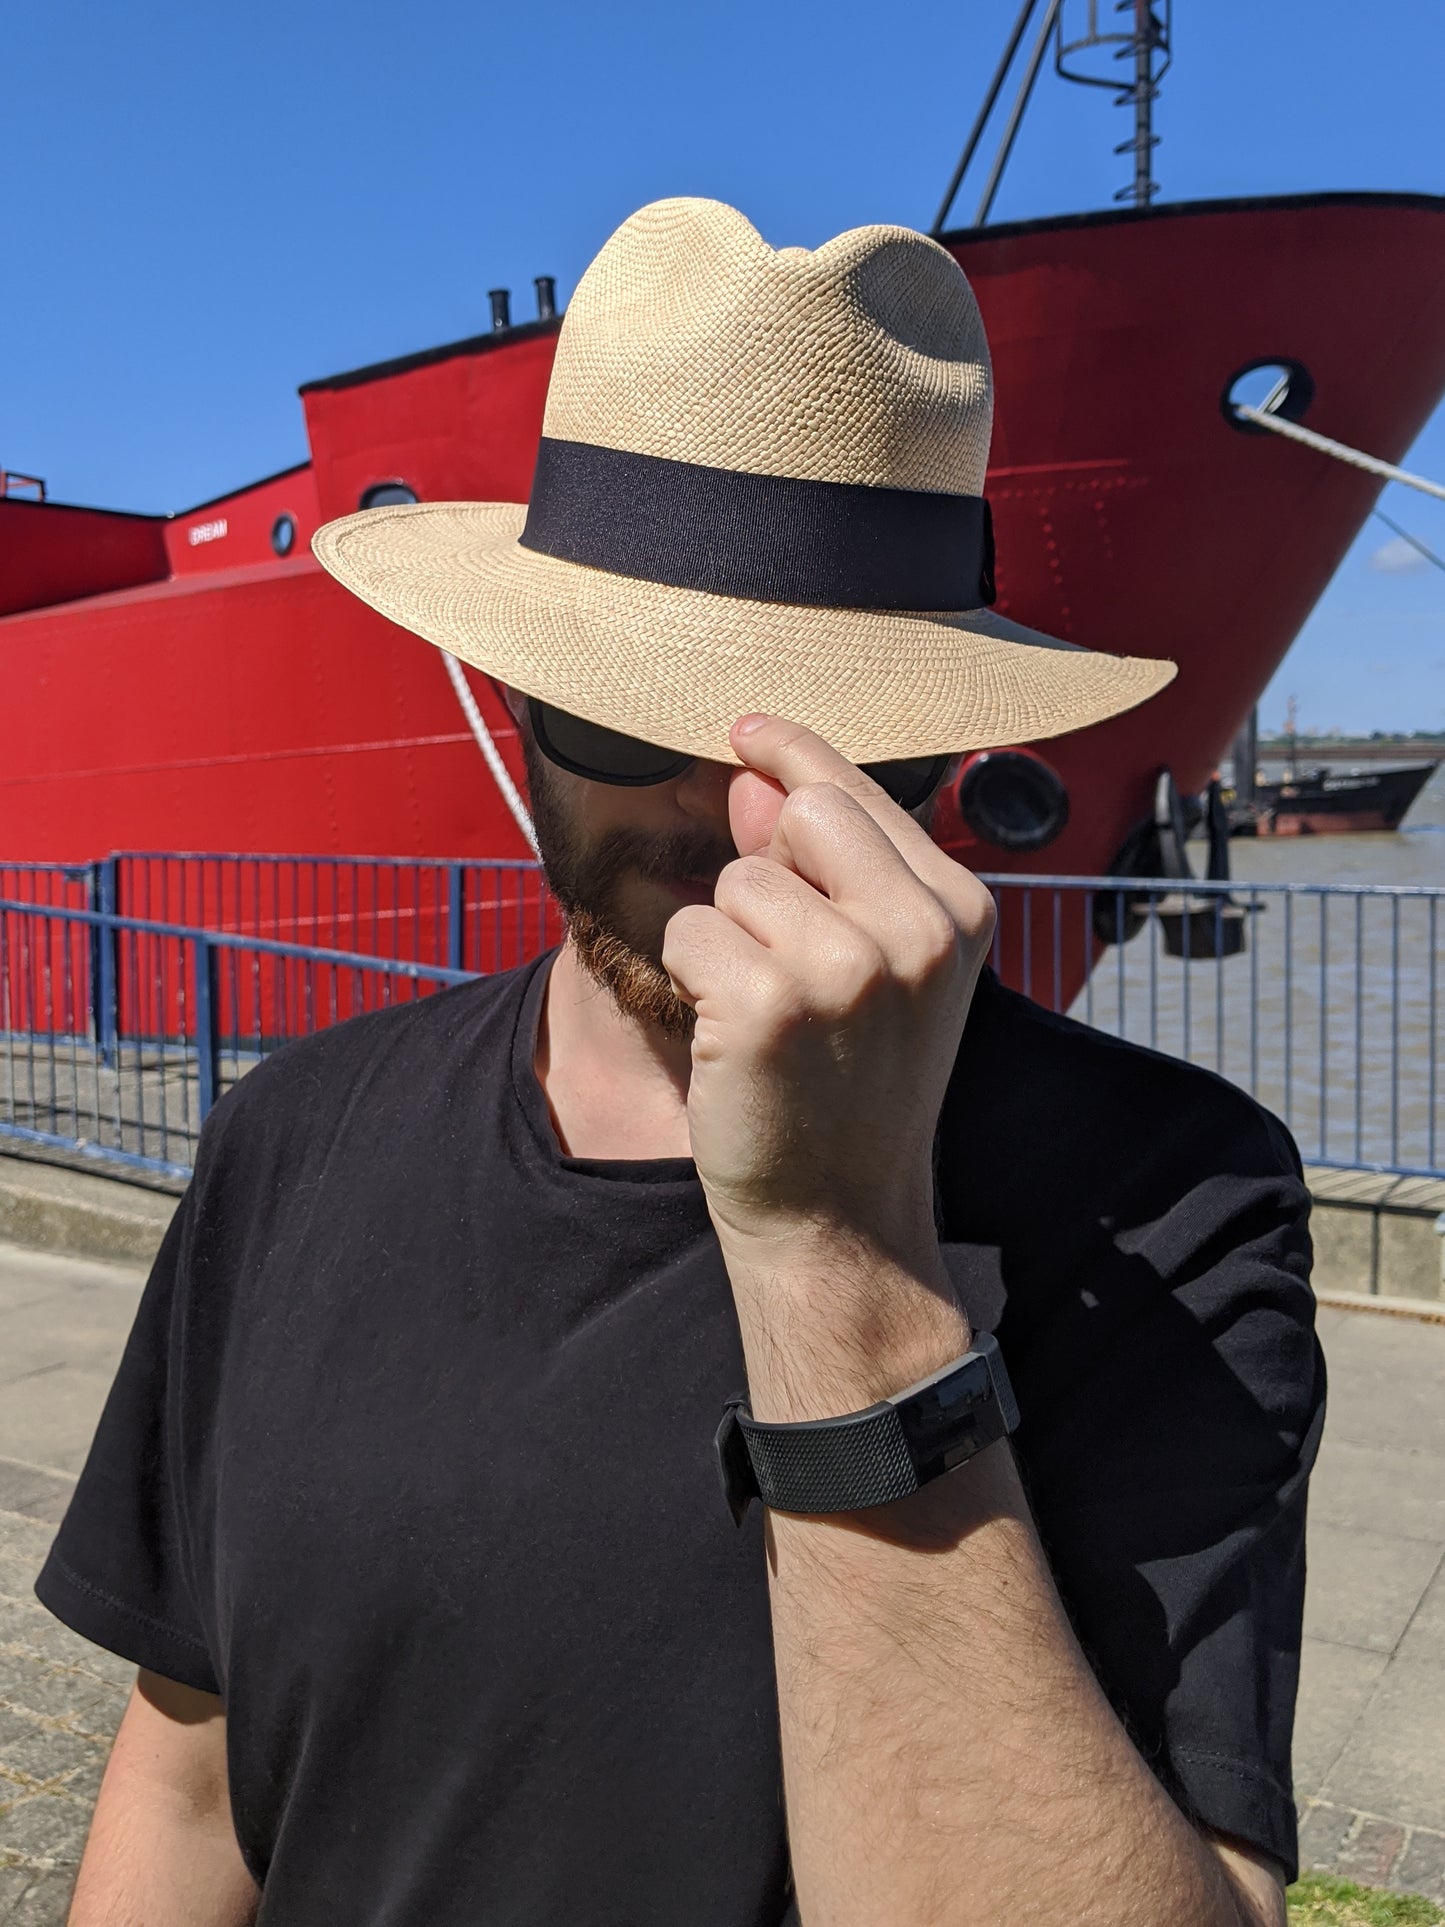 Natural Panama Hat with Brown Band - Travel Tube